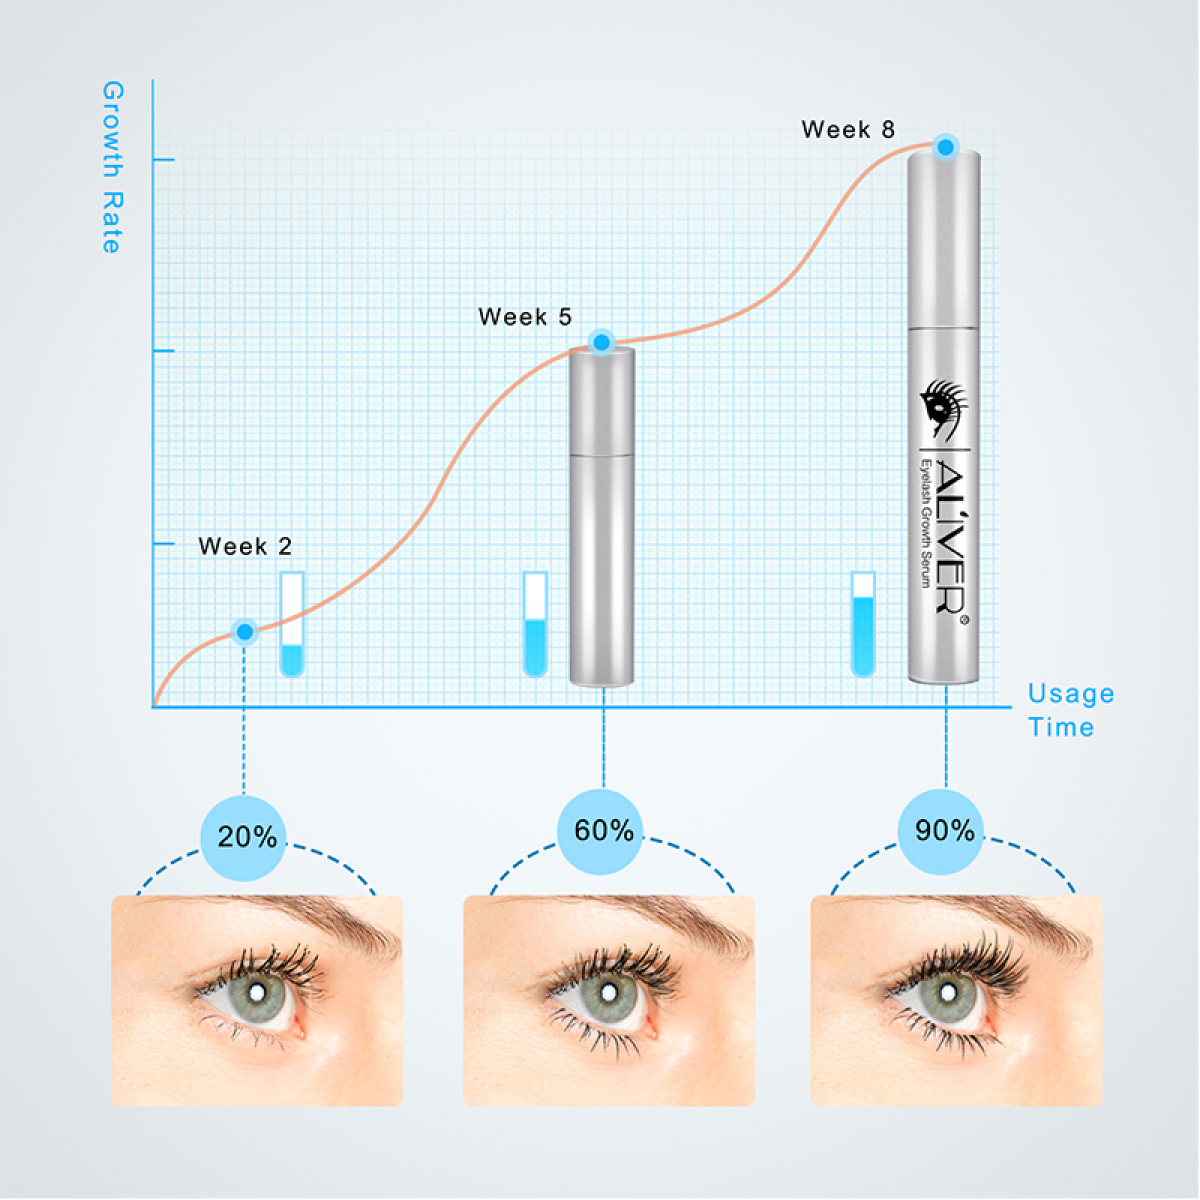 Fuller Thicker Eyelash Growth Serum Eyebrow Enhancer Lash Booster Longer